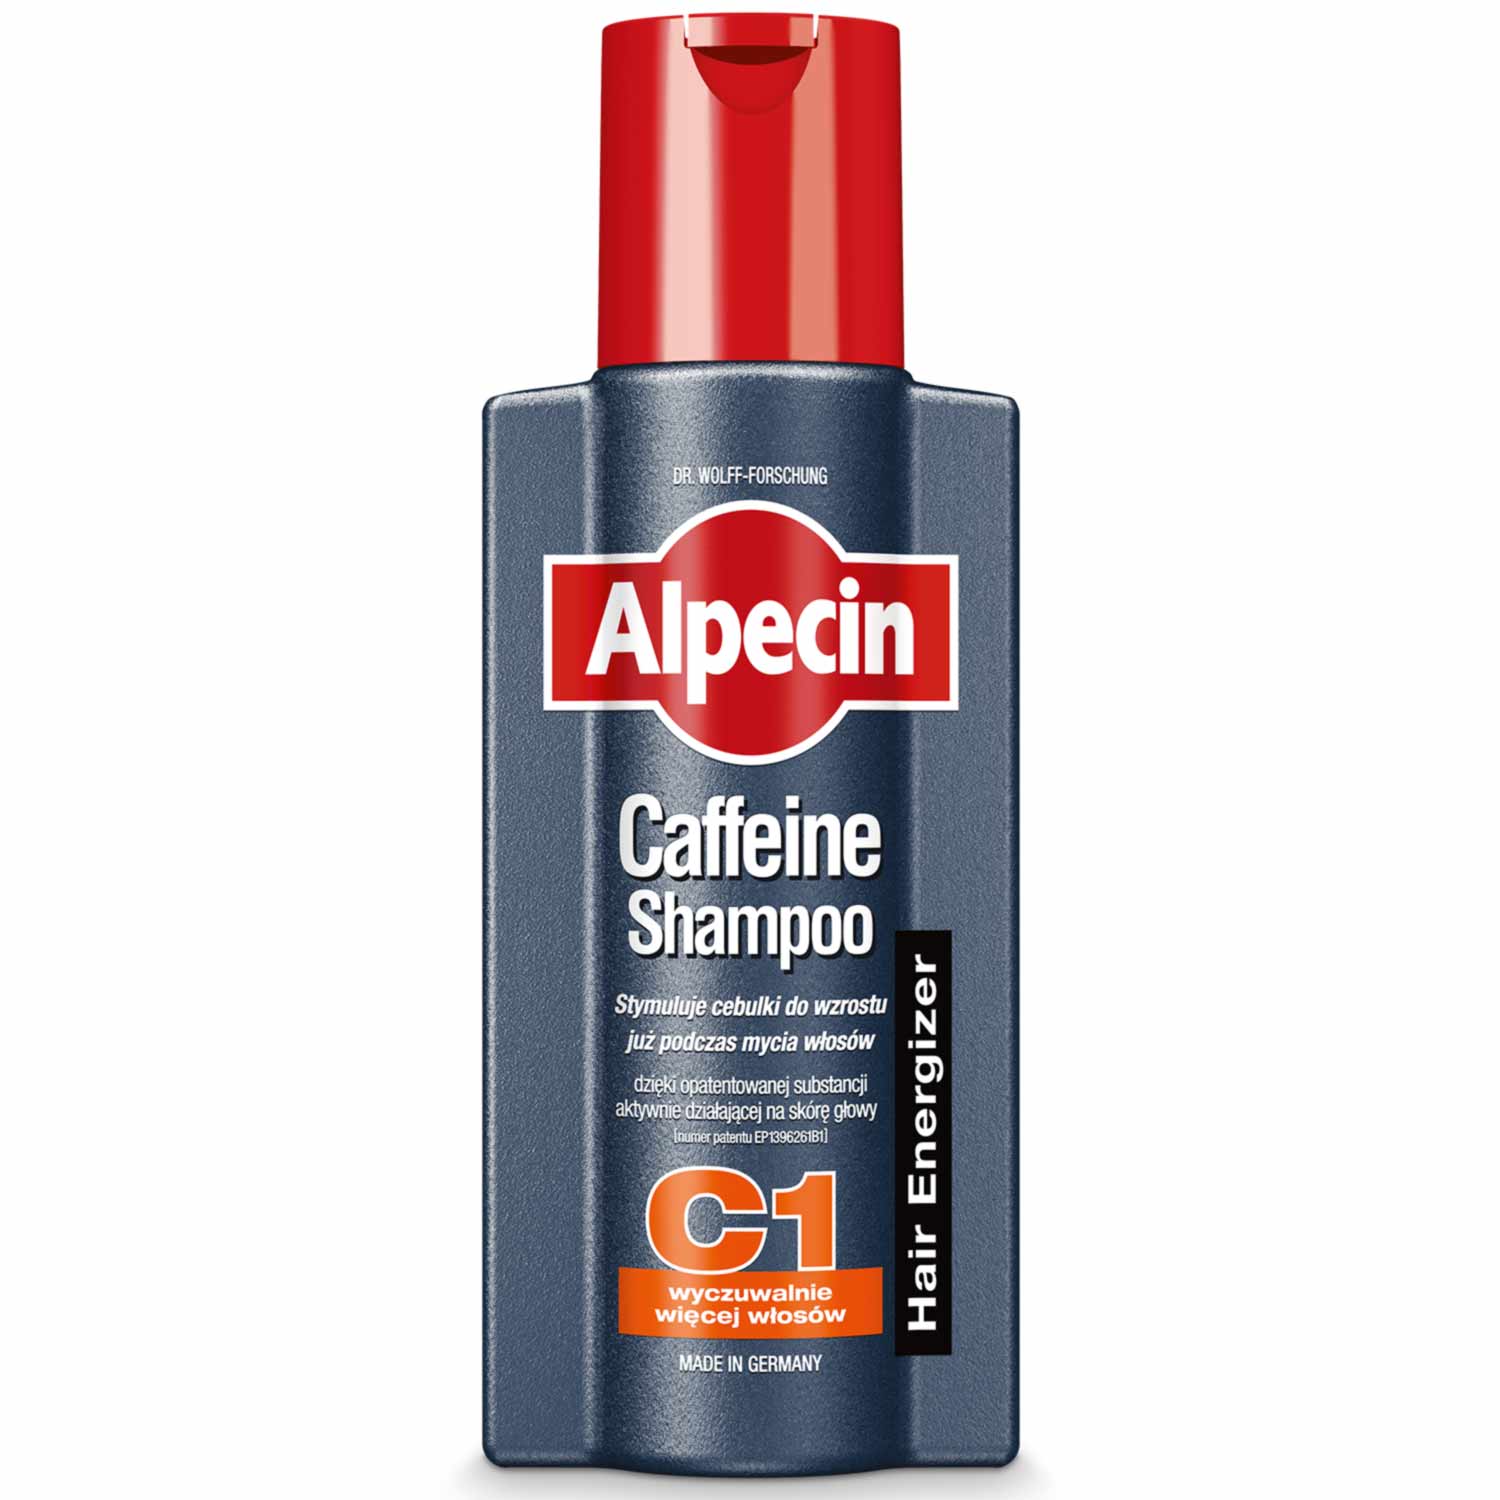 alpecin czarny szampon gemini